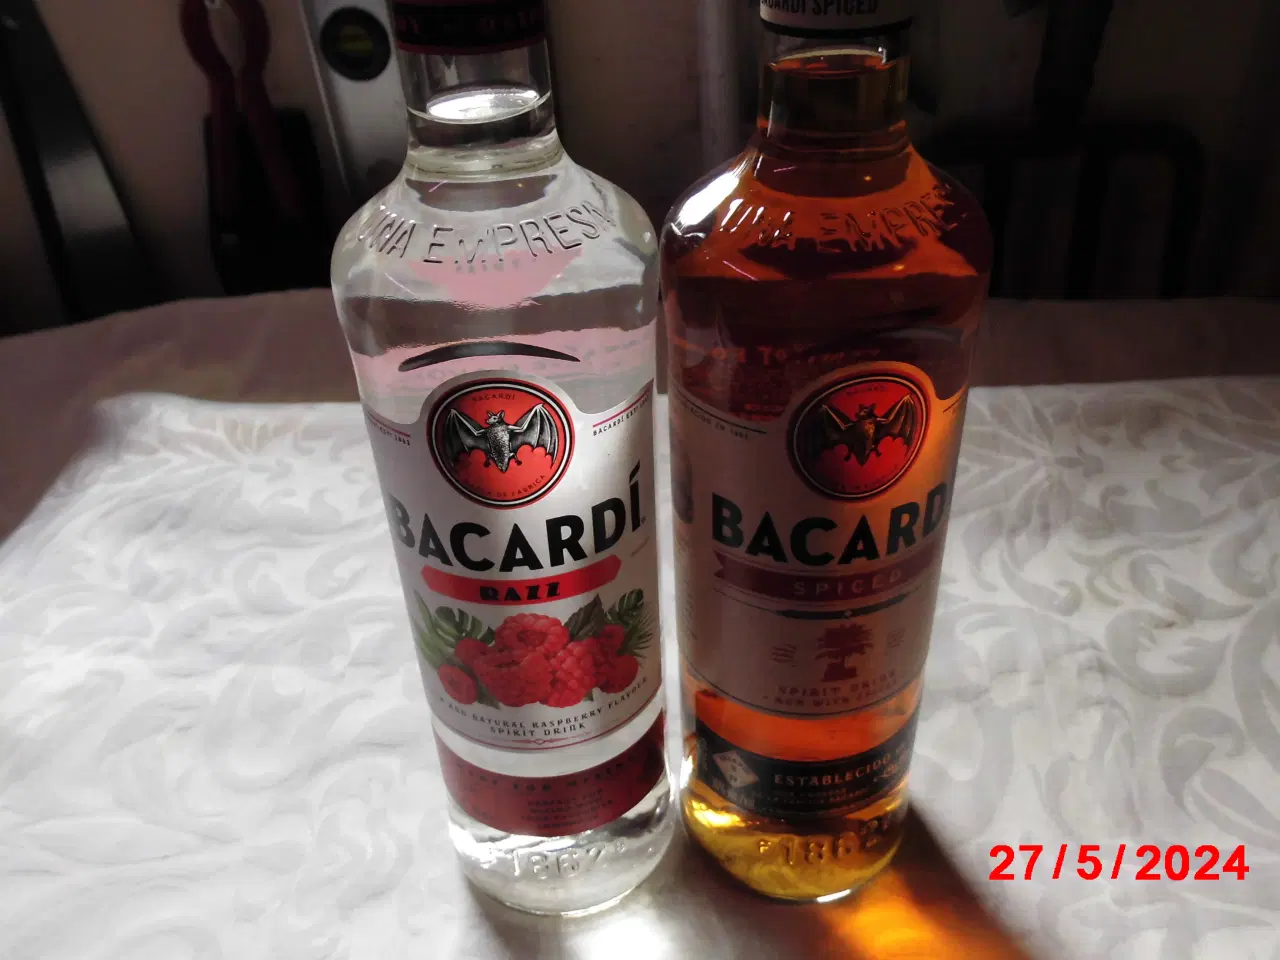 Billede 1 - 2 flasker Bacardi original 32-35 % alkohol